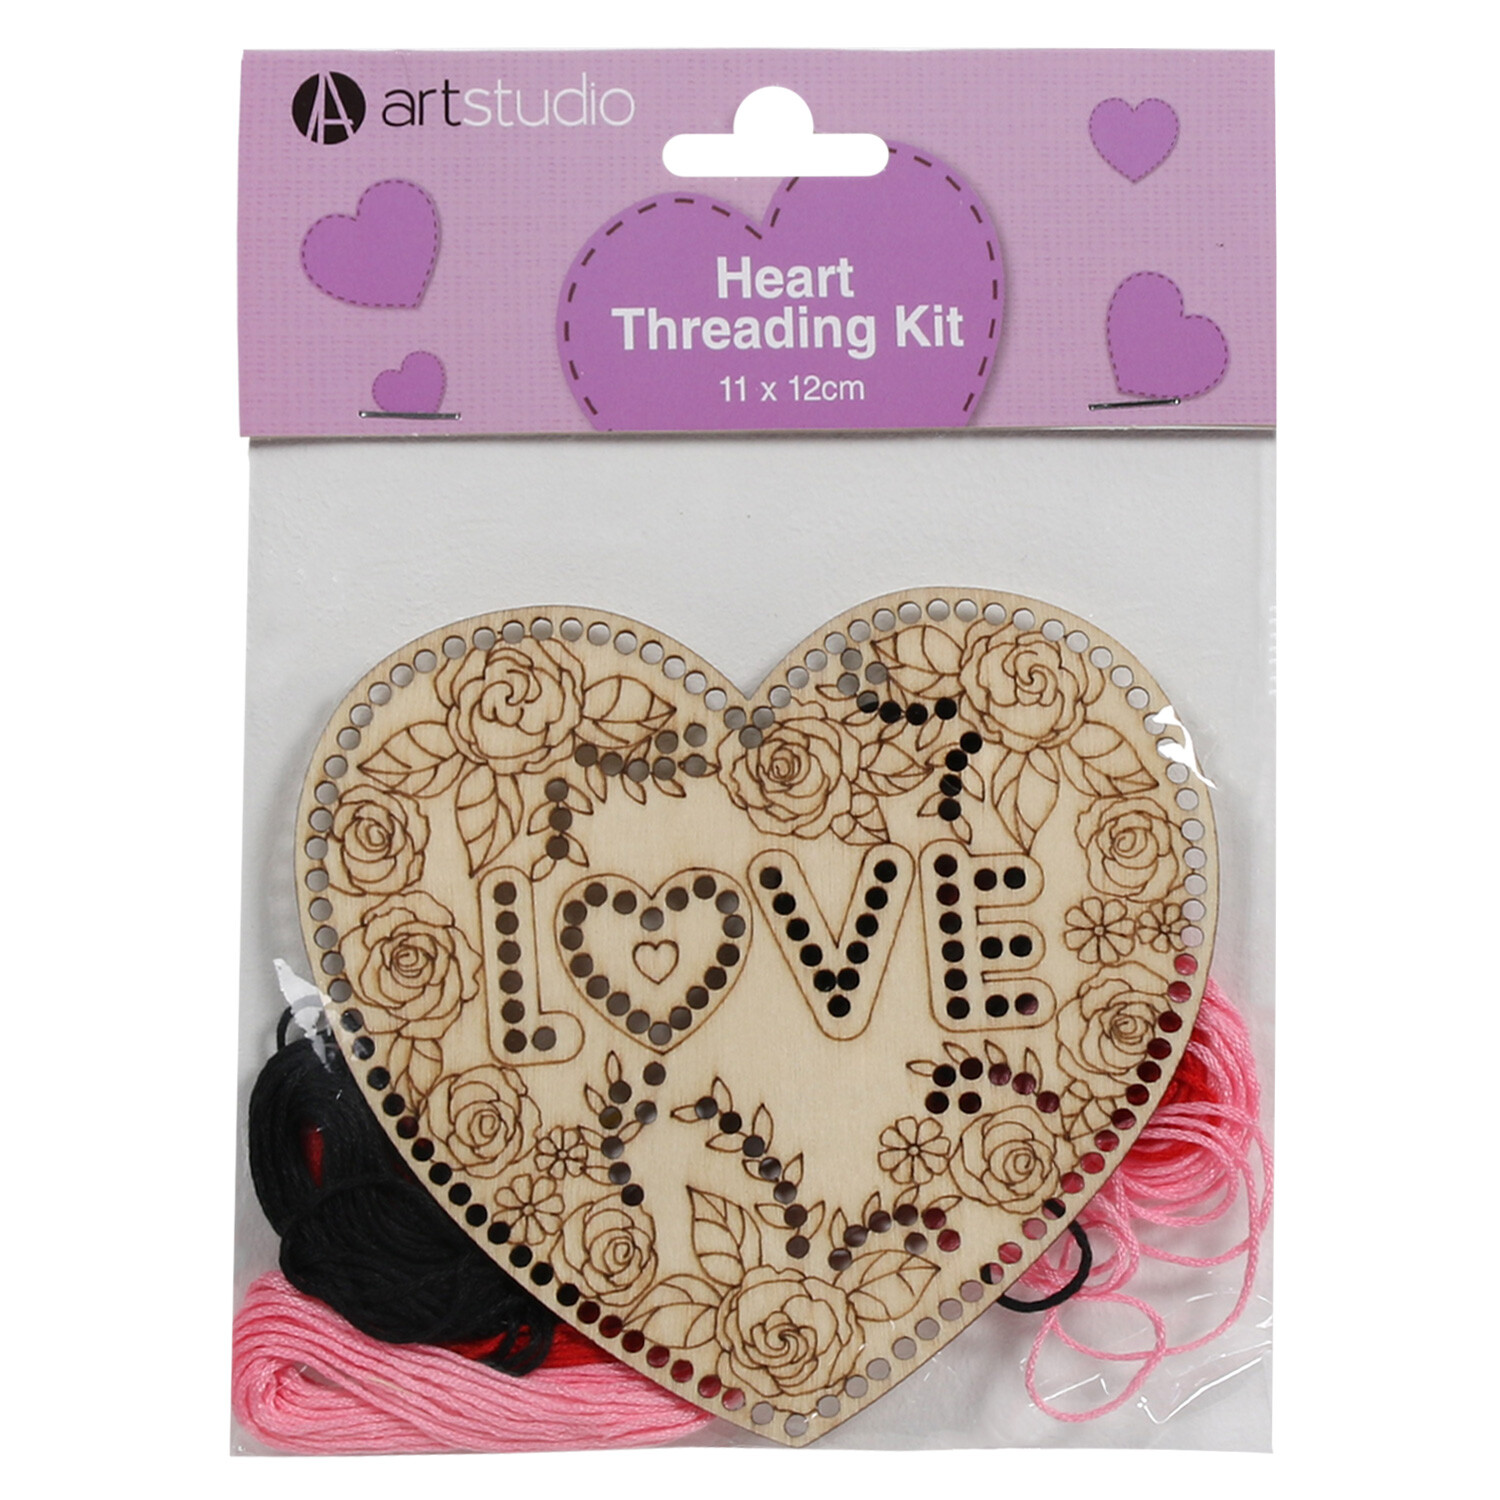 Heart Threading Kit Image